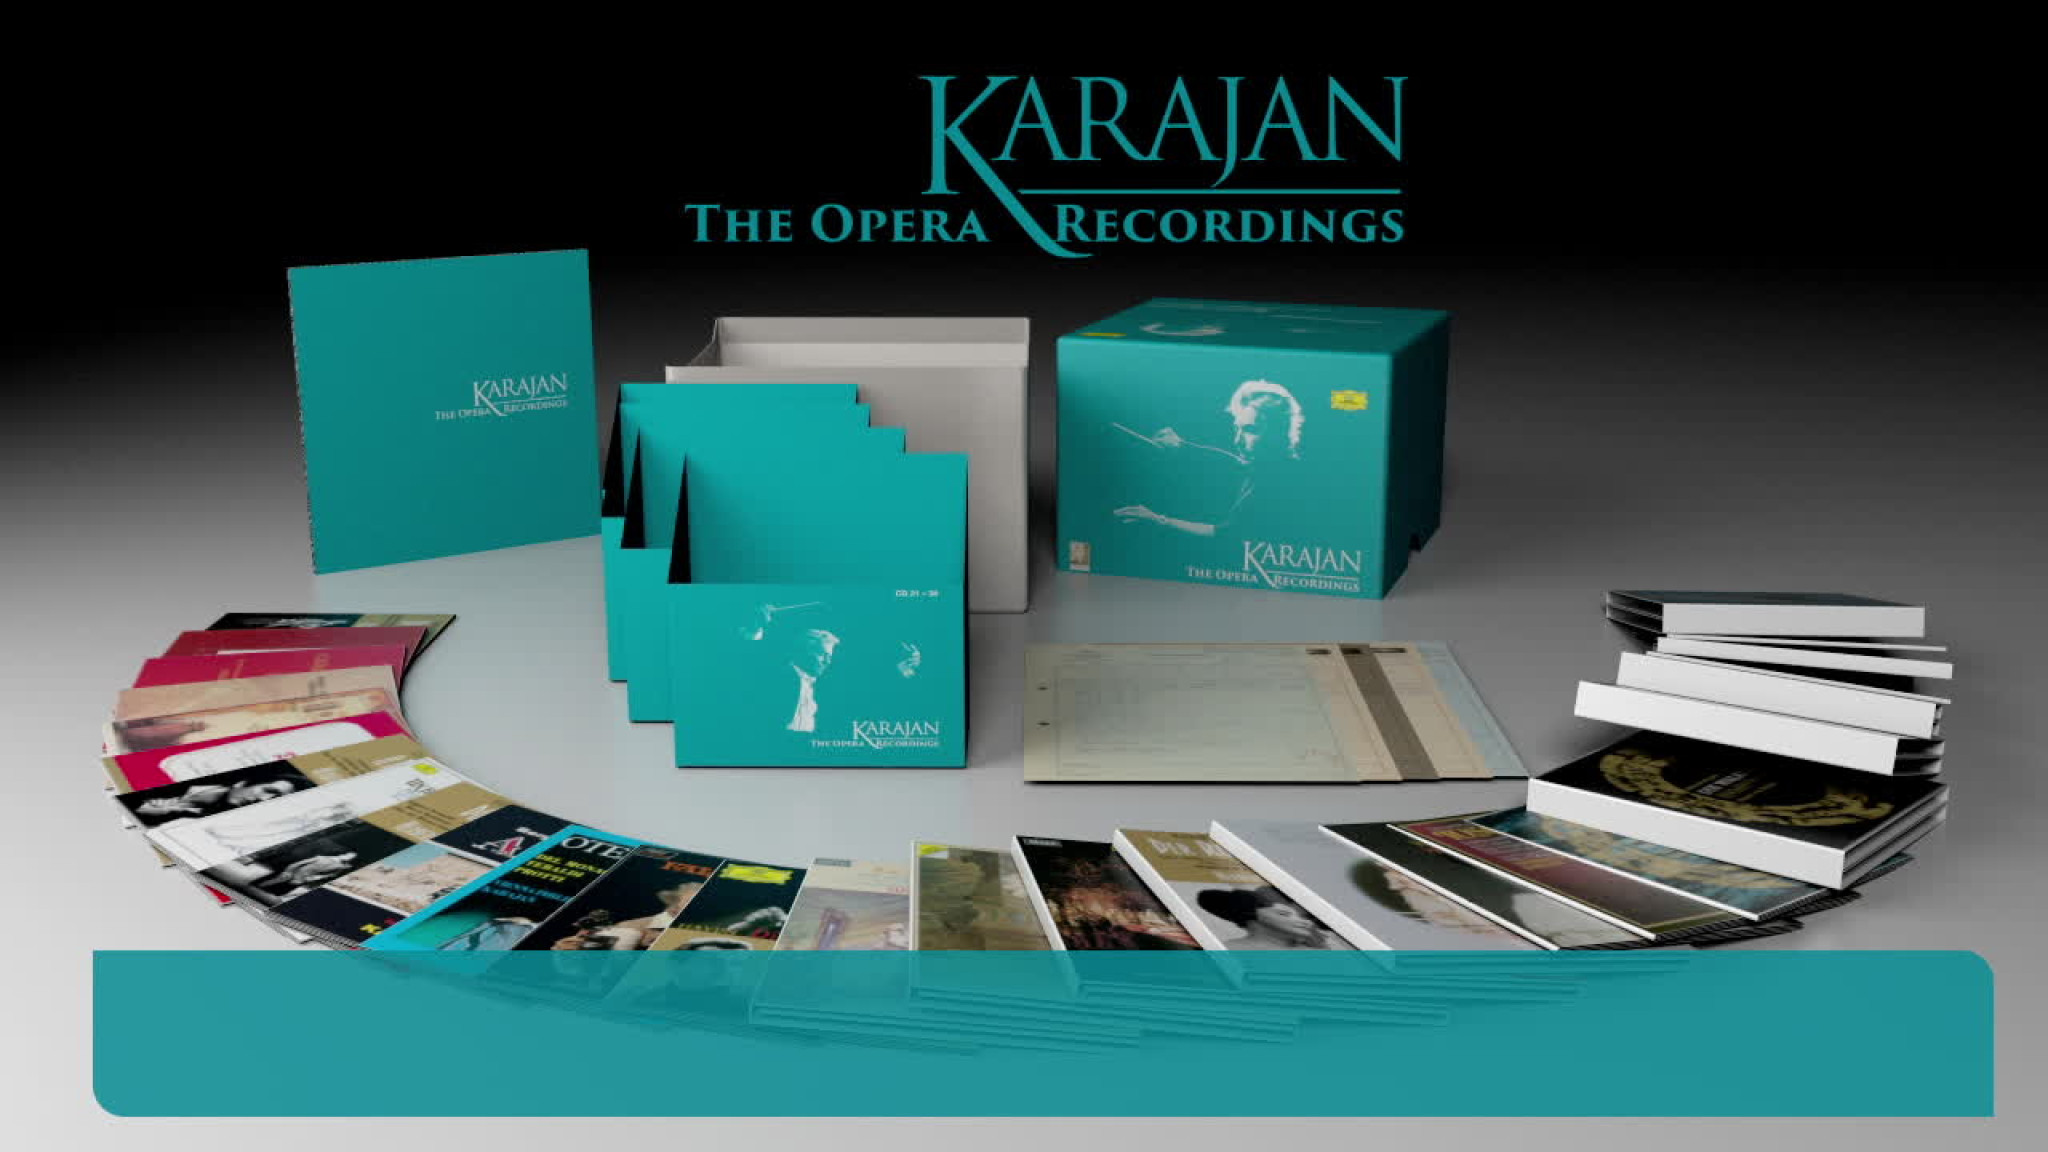 Karajan - The Opera Recordings (Teaser)